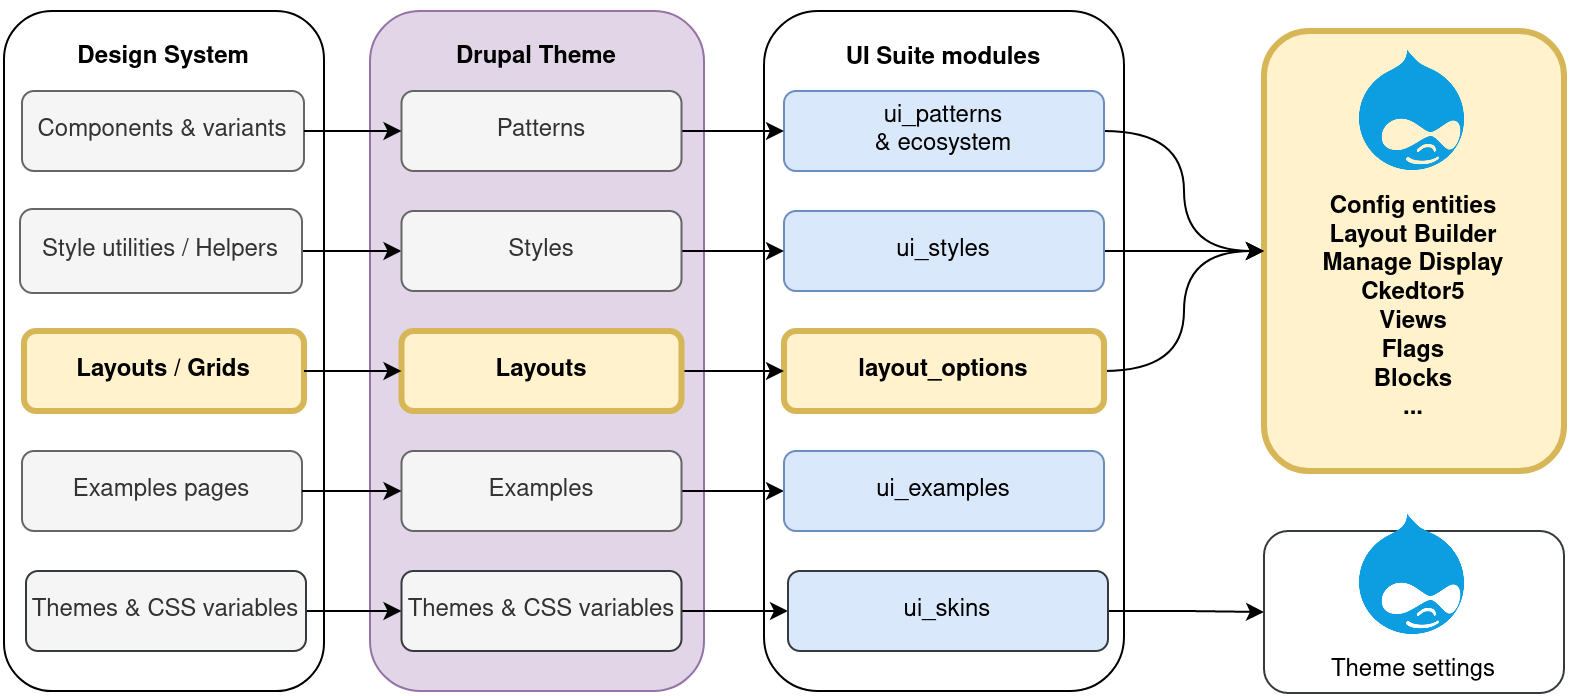 UI Suite Overview